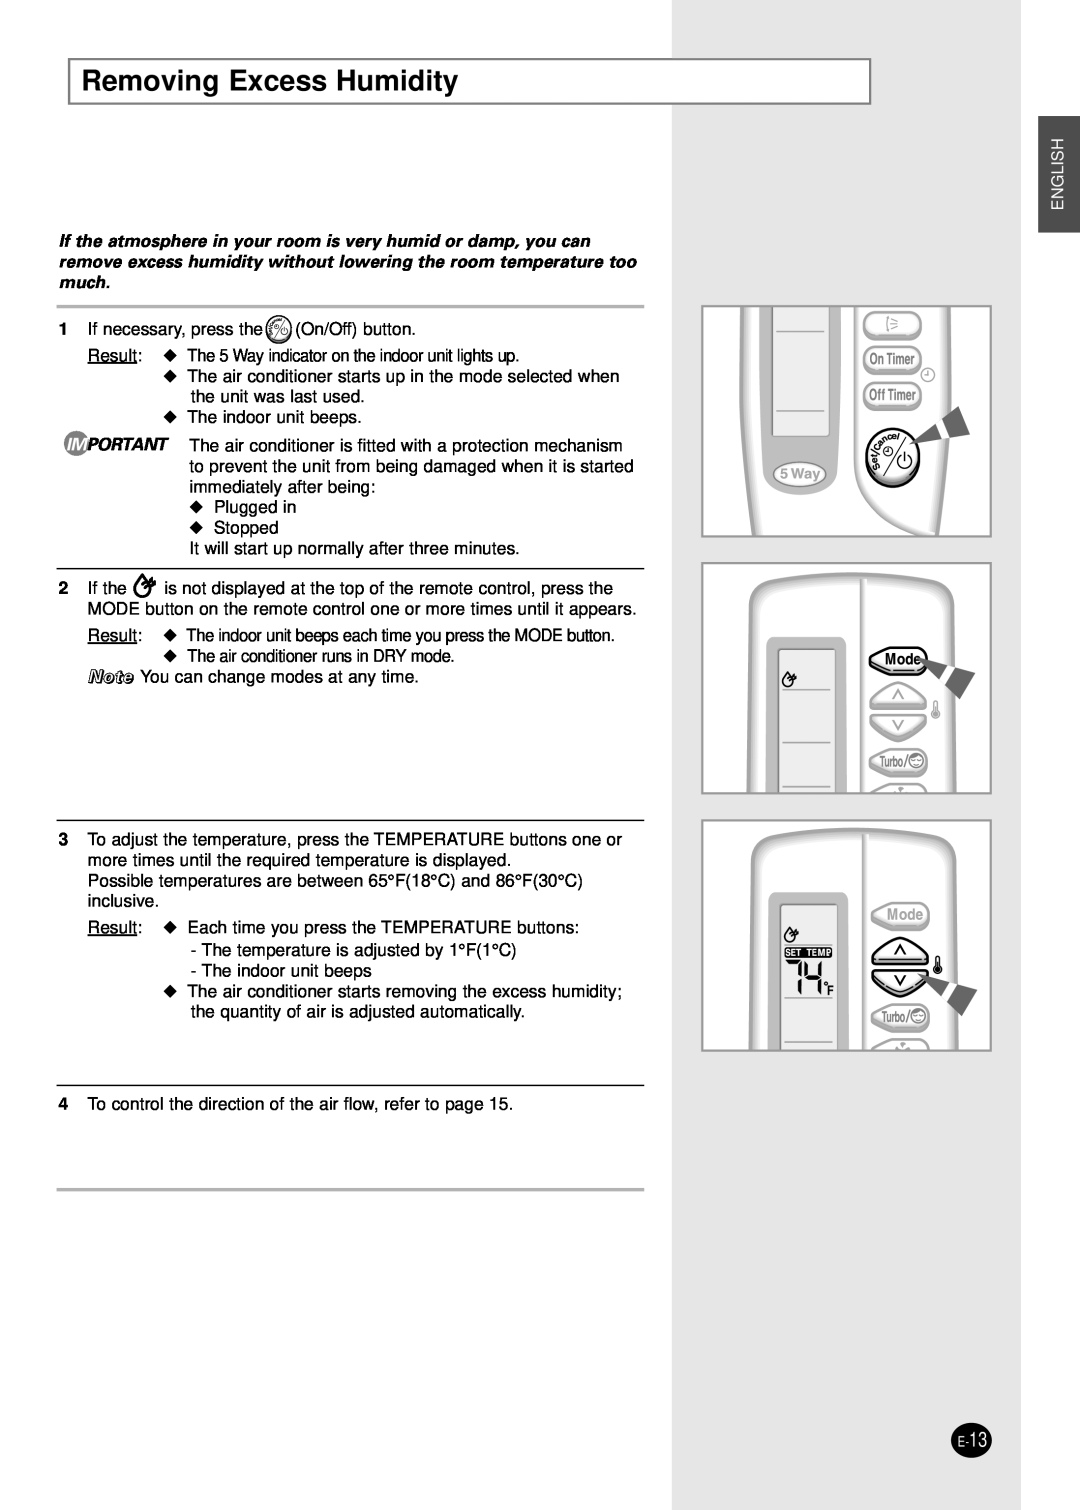 Samsung AM18B1(B2)C09 installation manual Removing Excess Humidity, English 